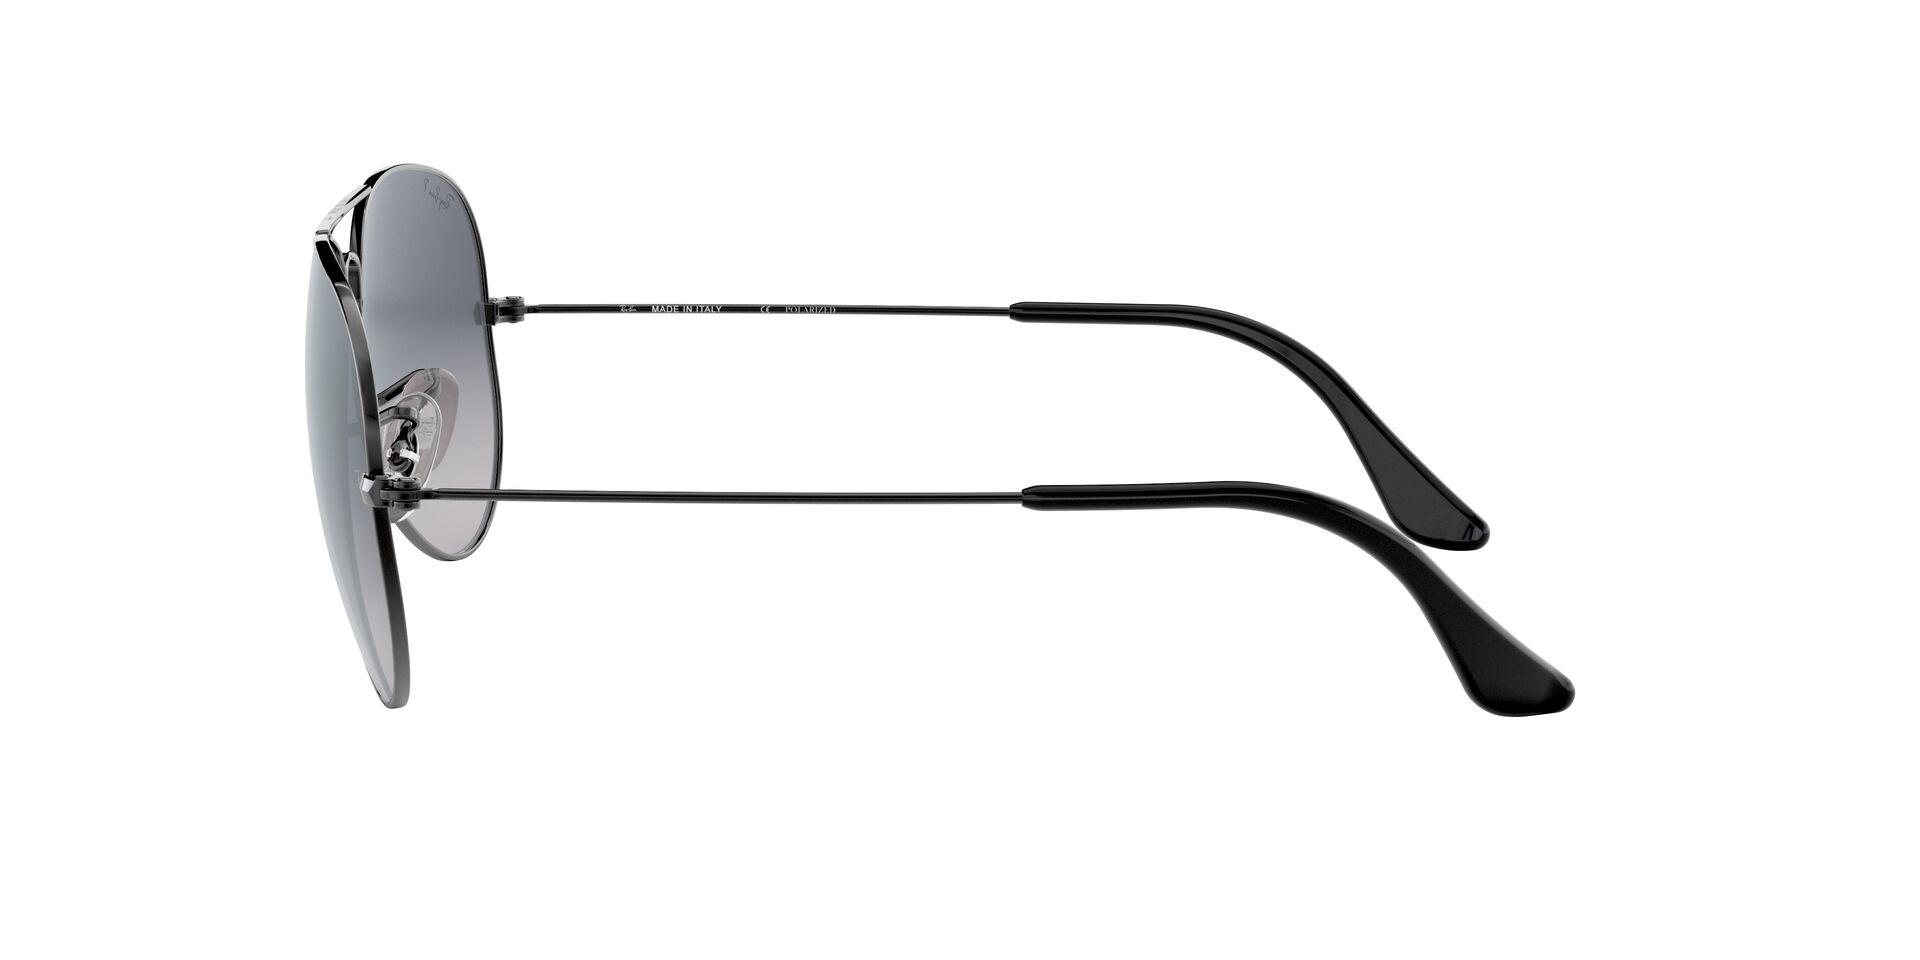 Mắt Kính RAY-BAN AVIATOR LARGE METAL - RB3025 004/78 -Sunglasses